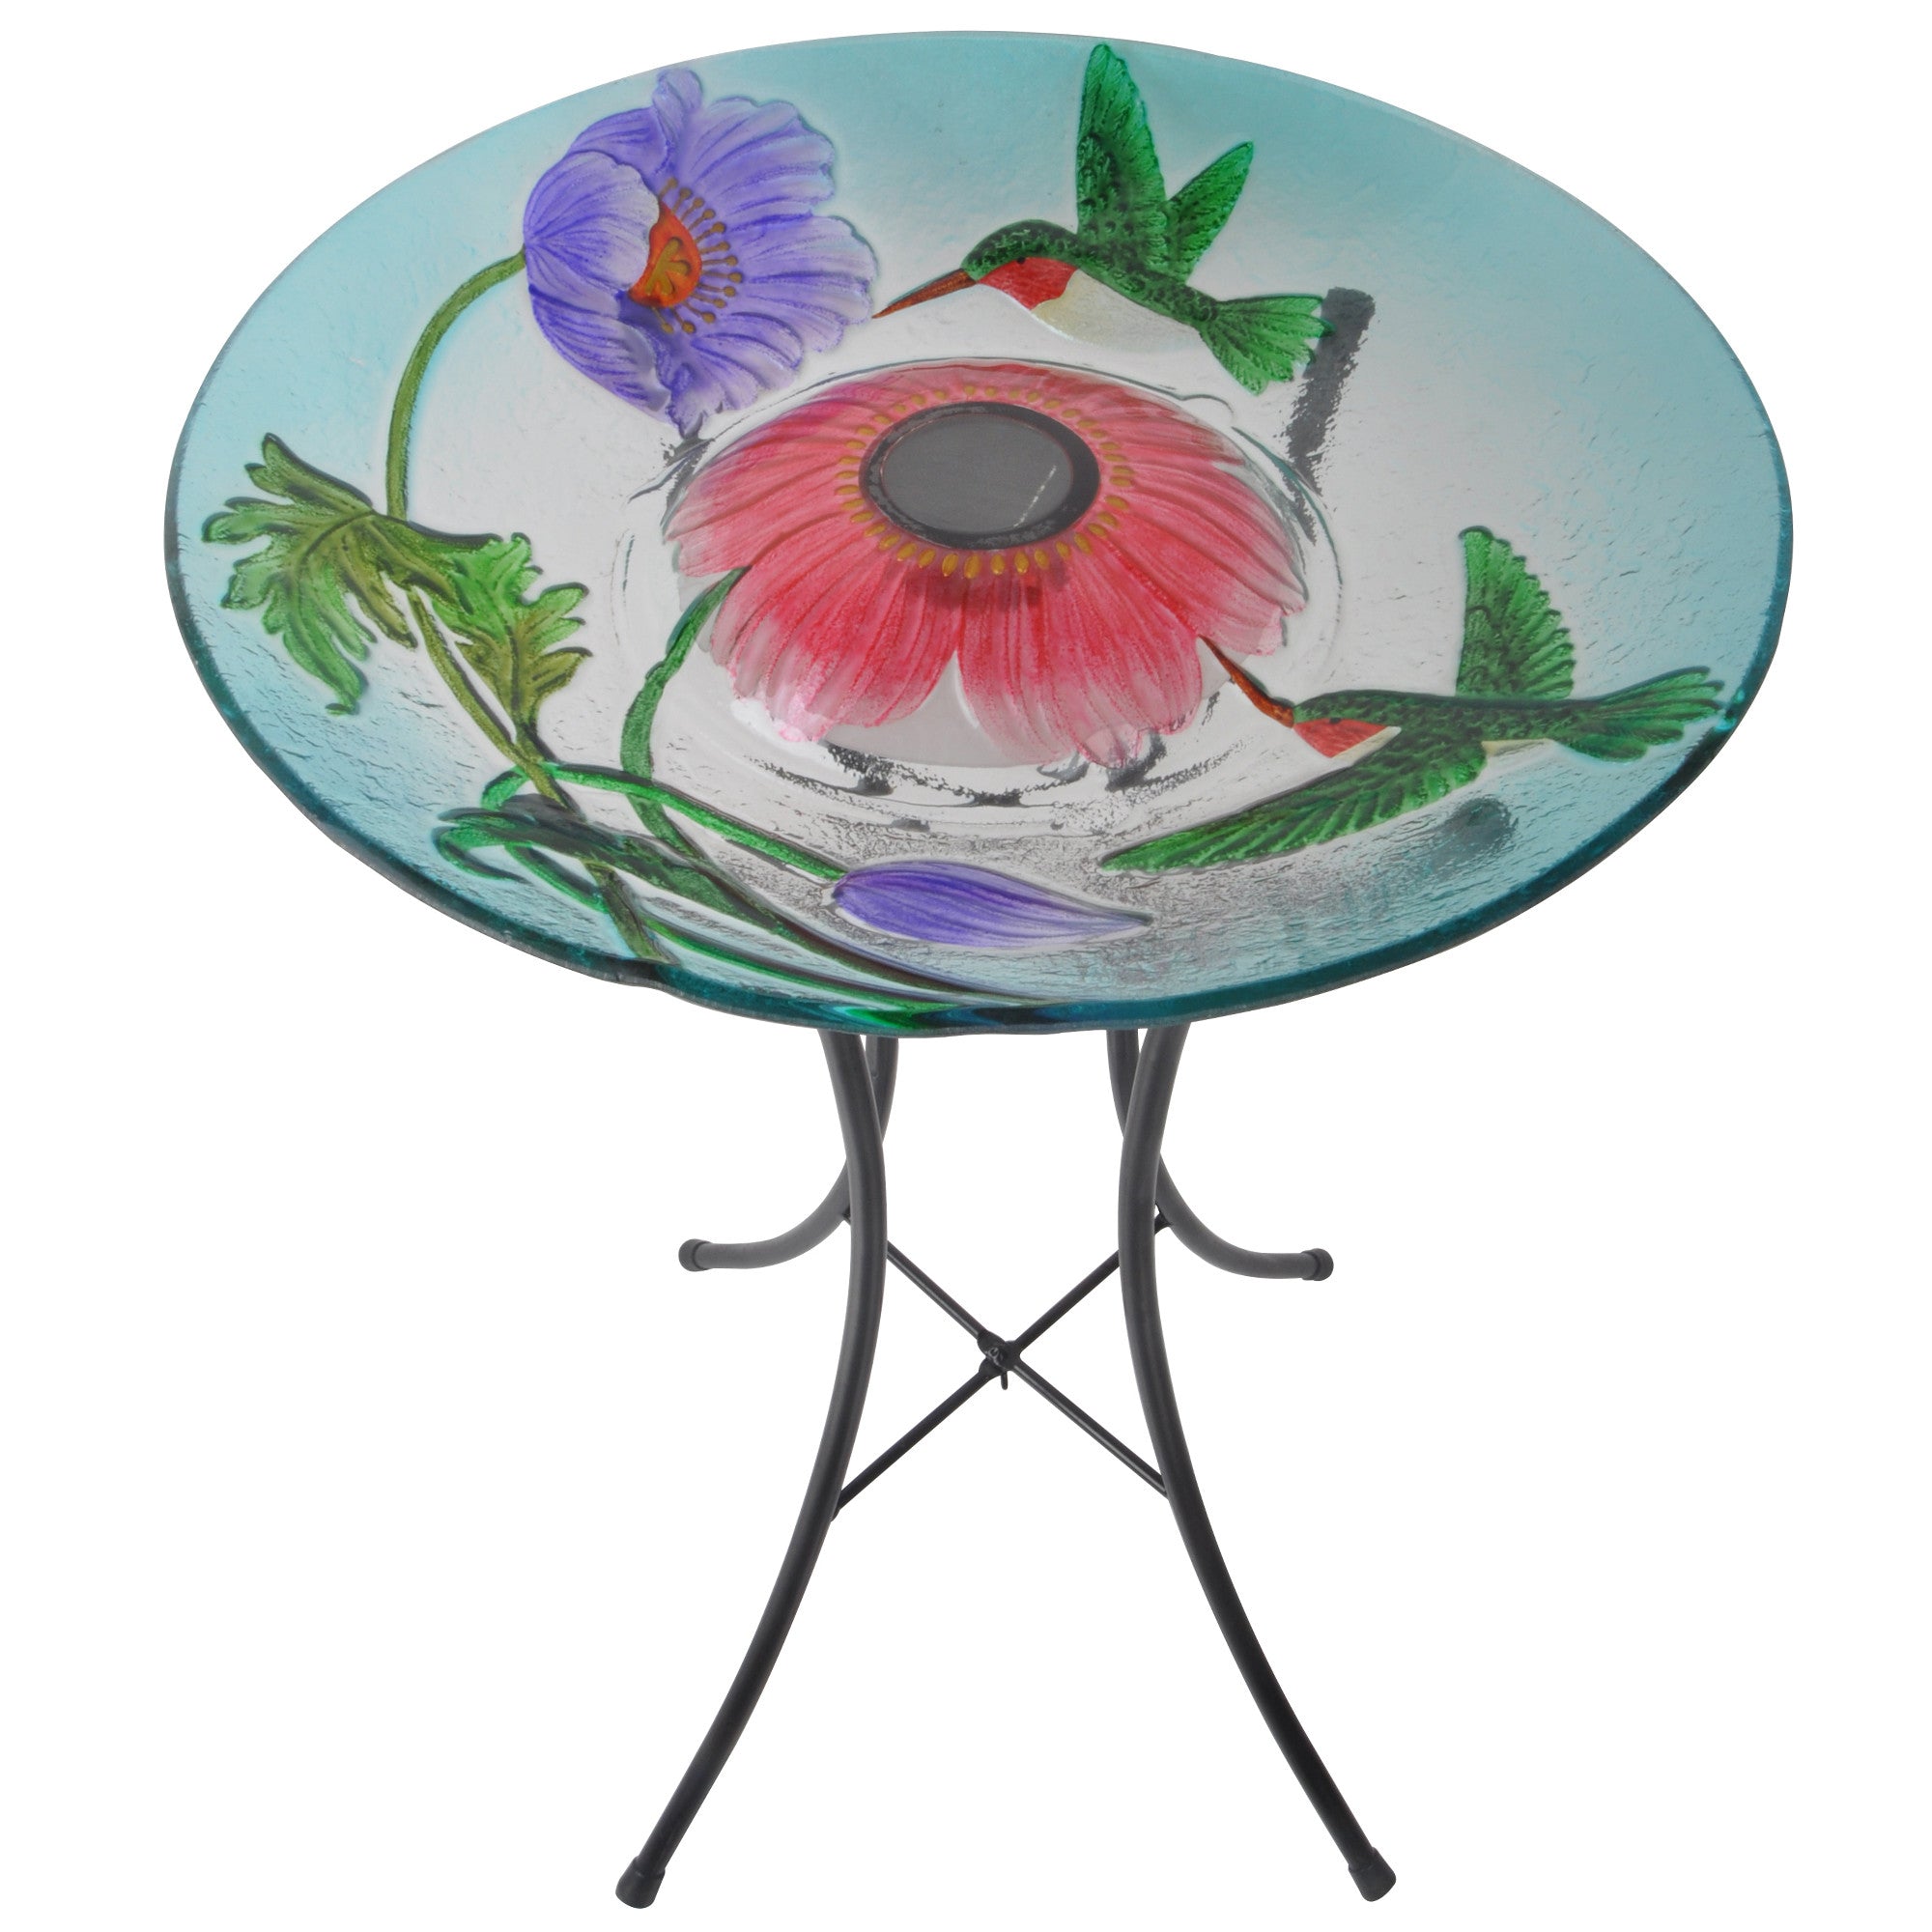 Teamson Home 18" Outdoor Solar Glass Hummingbird Birdbath with LED Lights and Stand, Multicolor